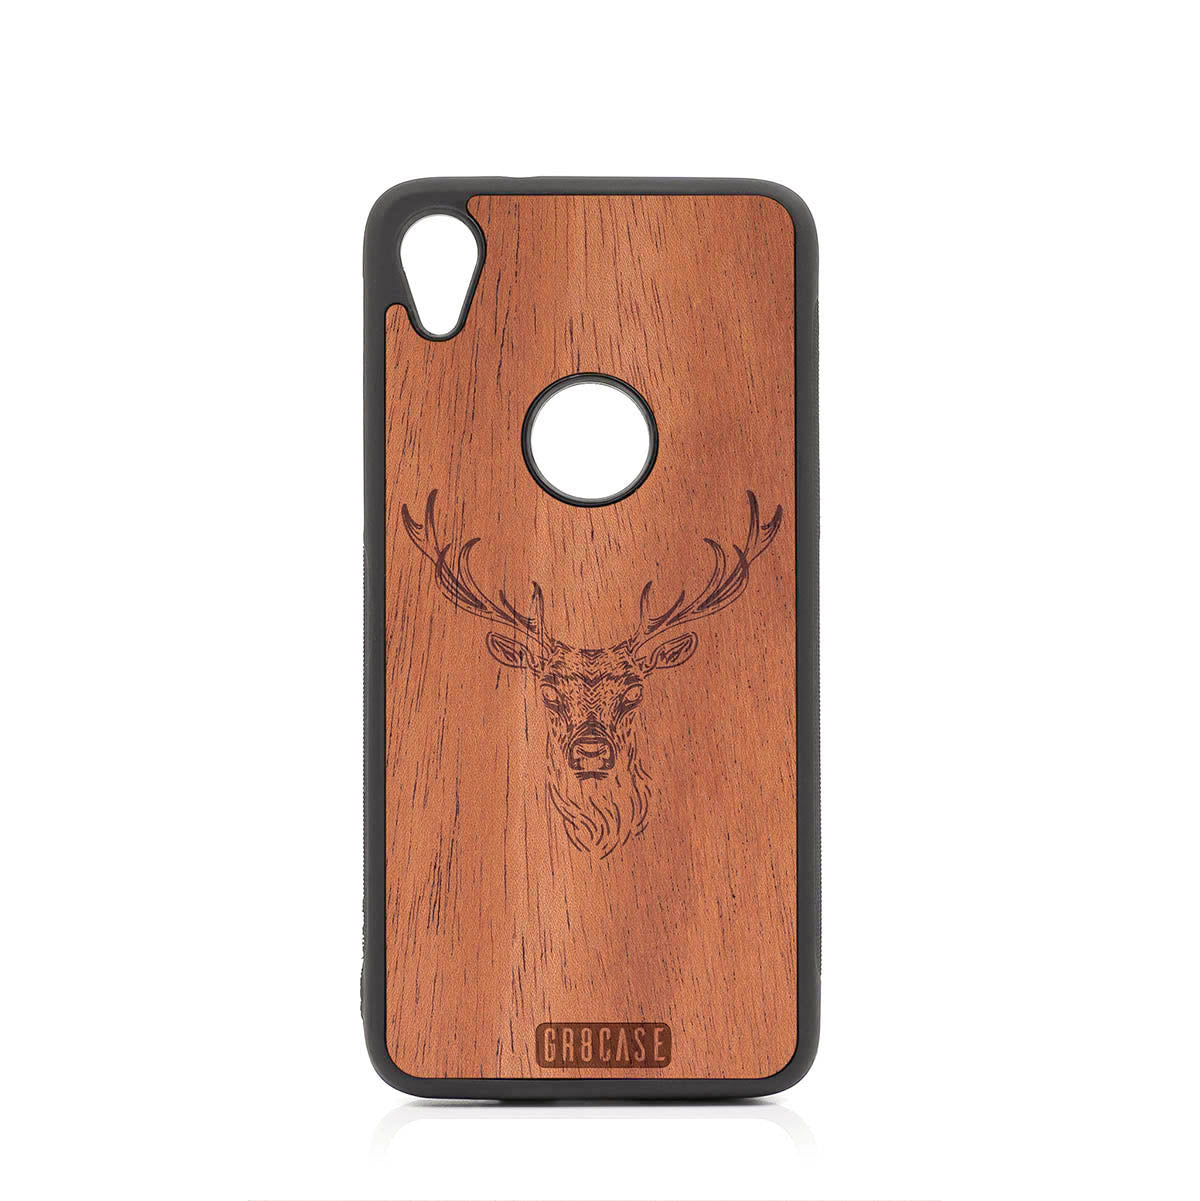 Elk Buck Design Wood Case For Moto E6 by GR8CASE